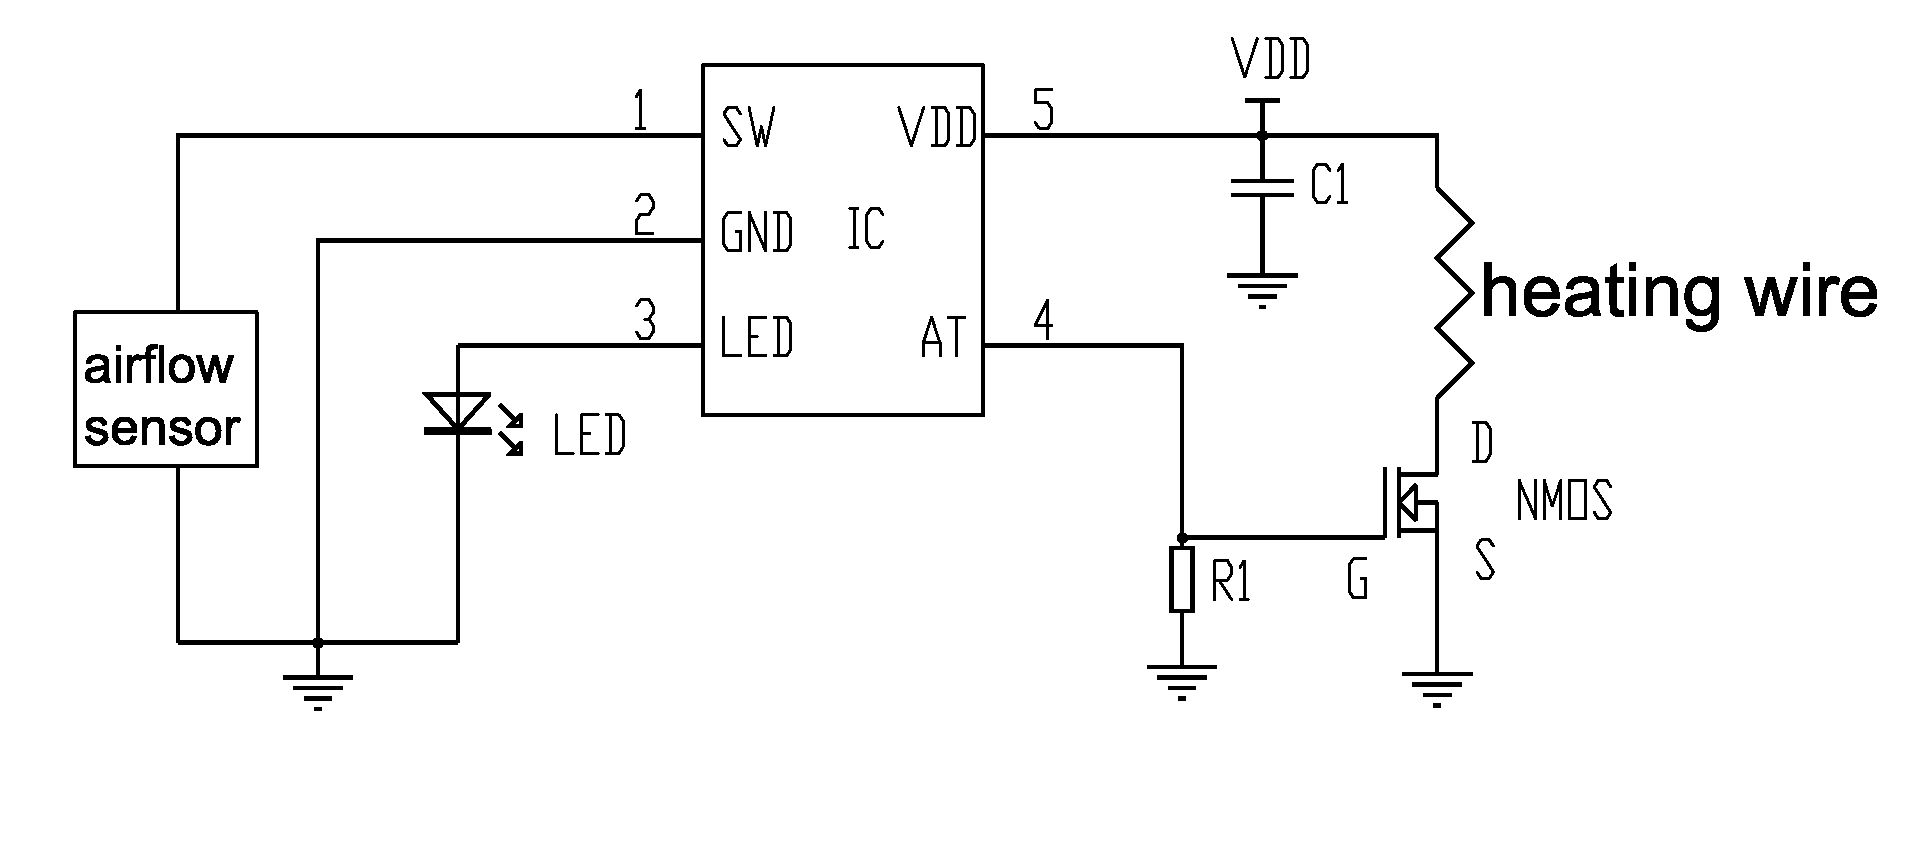 Electronic cigarette circuit